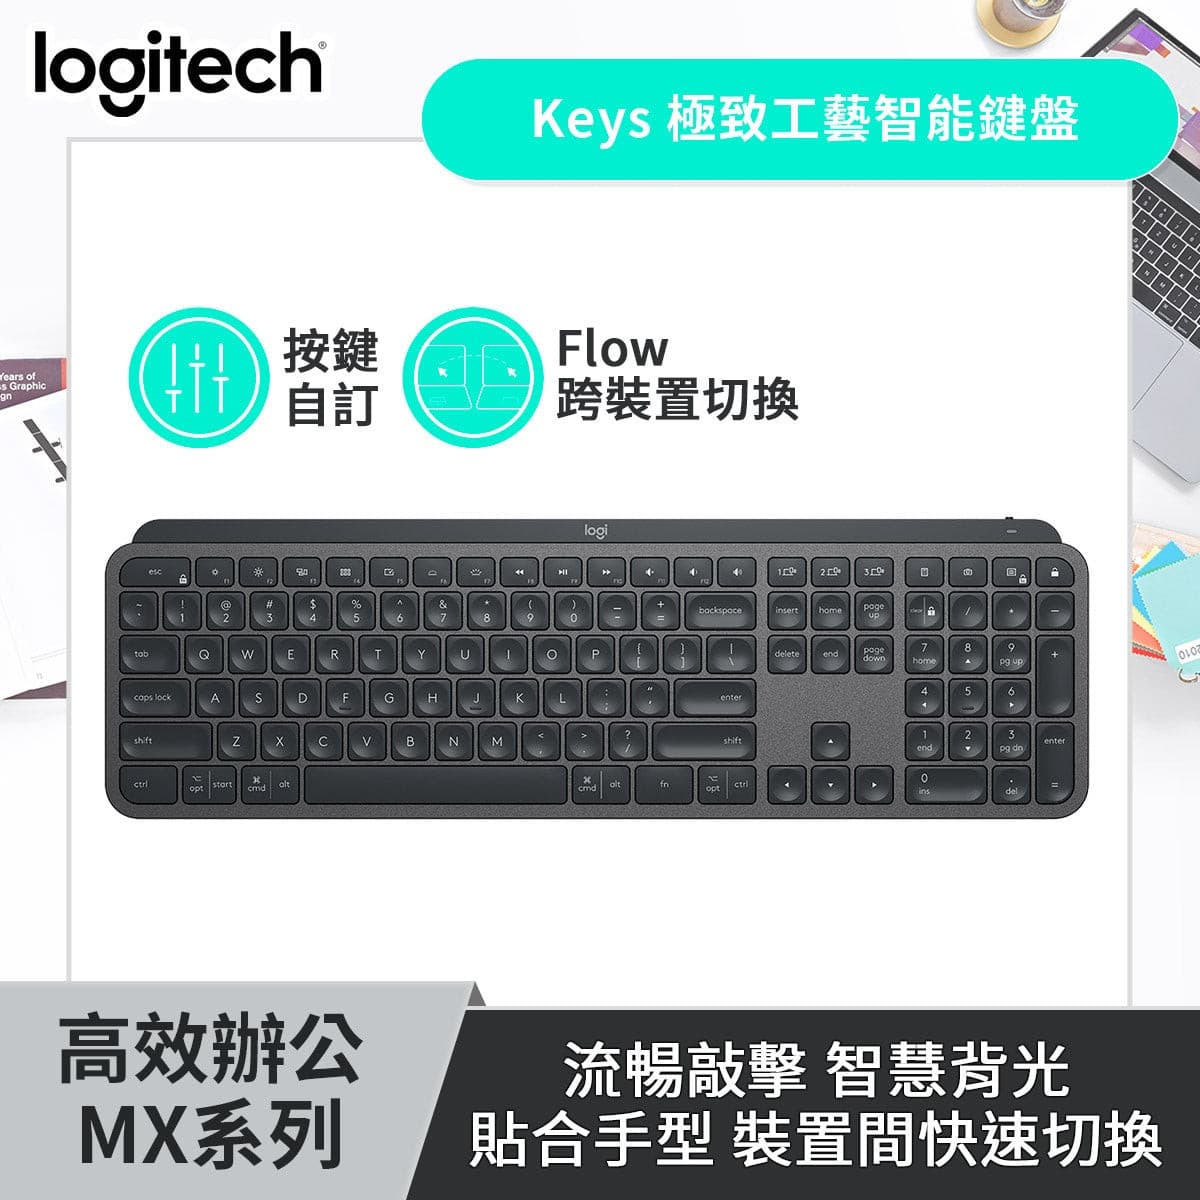 Keys for Business 極致工藝智能鍵盤 - B2B-CHT - 羅技 Logi 網路旗艦店